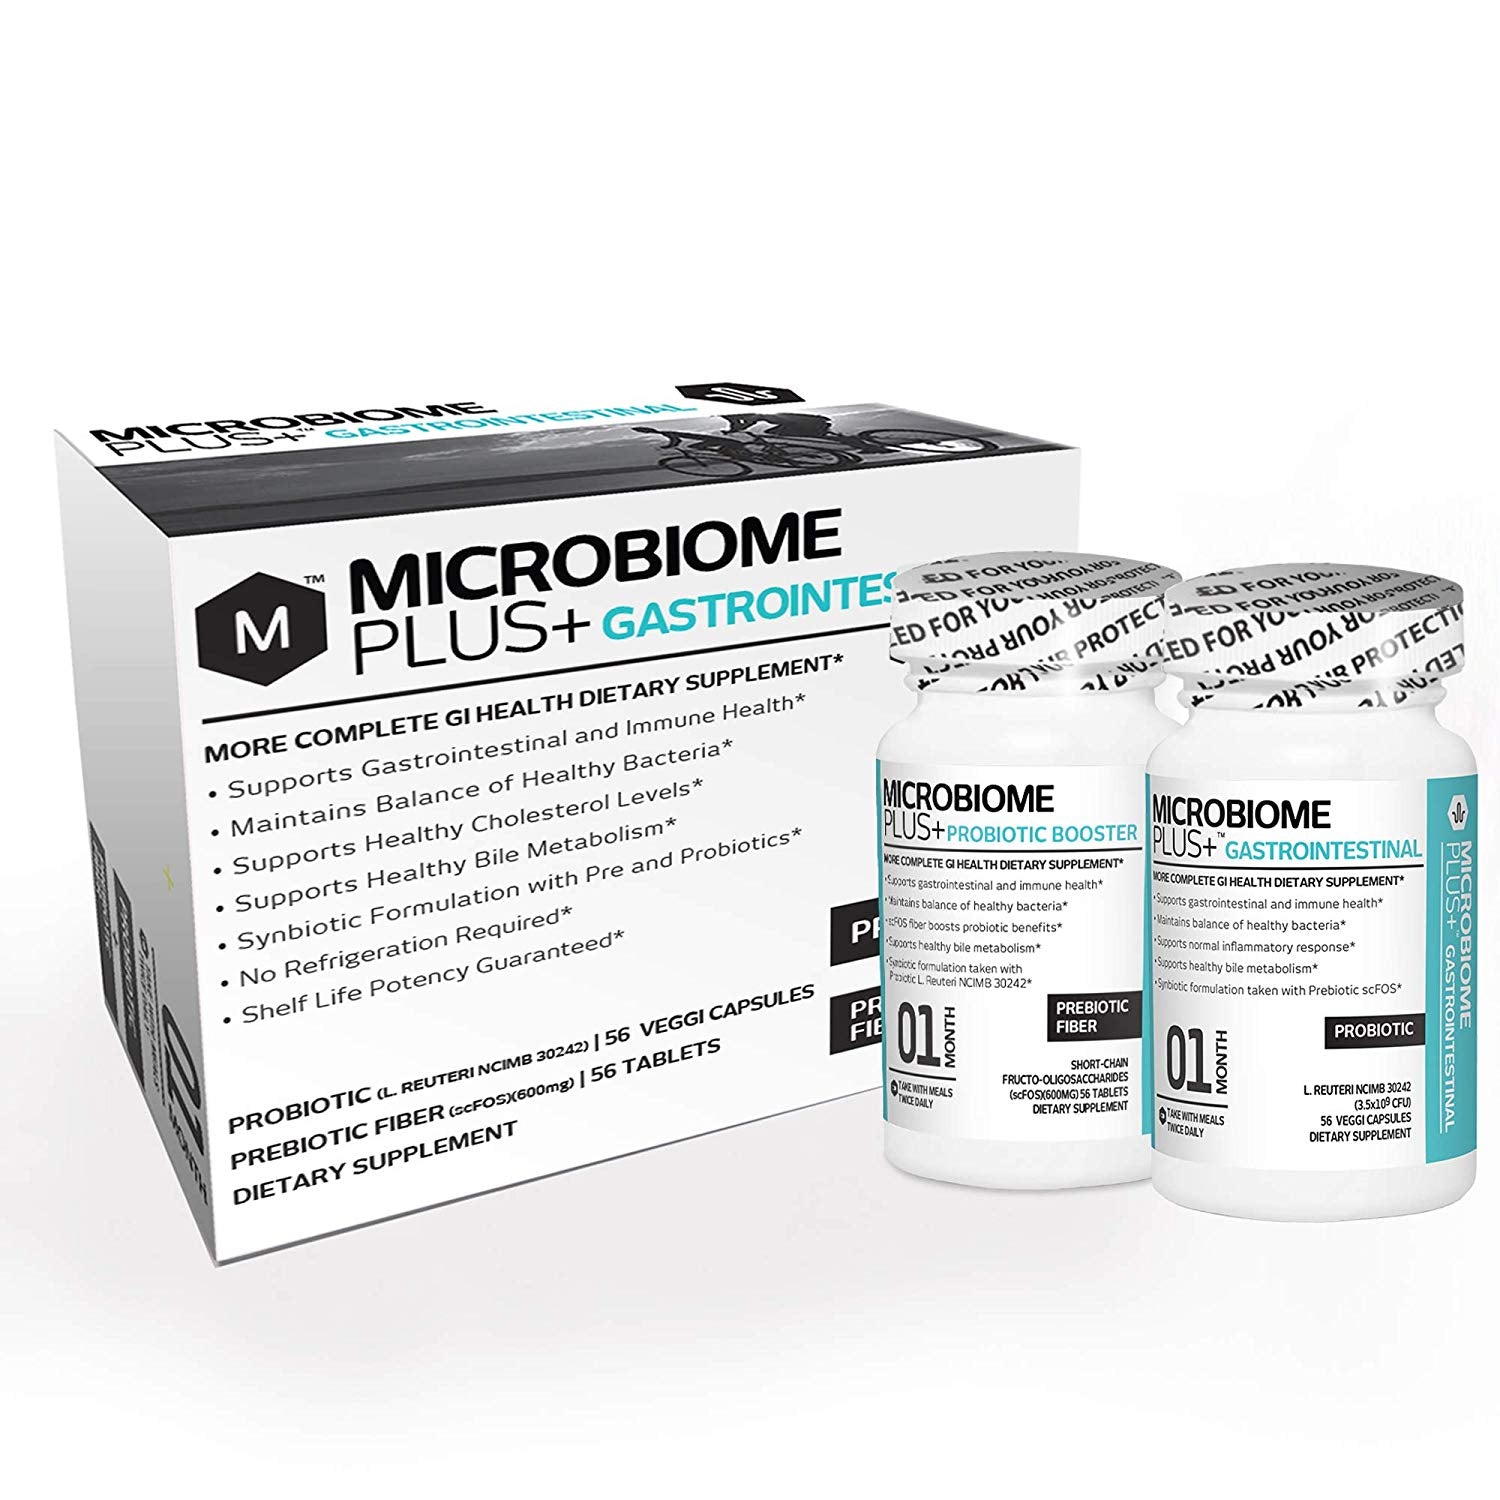 Microbiome Plus+ Gastrointestinal Combo Probioitic L. Reuteri NCIMB 30242 & Prebiotic scFOS Fiber - Microbiome Plus+